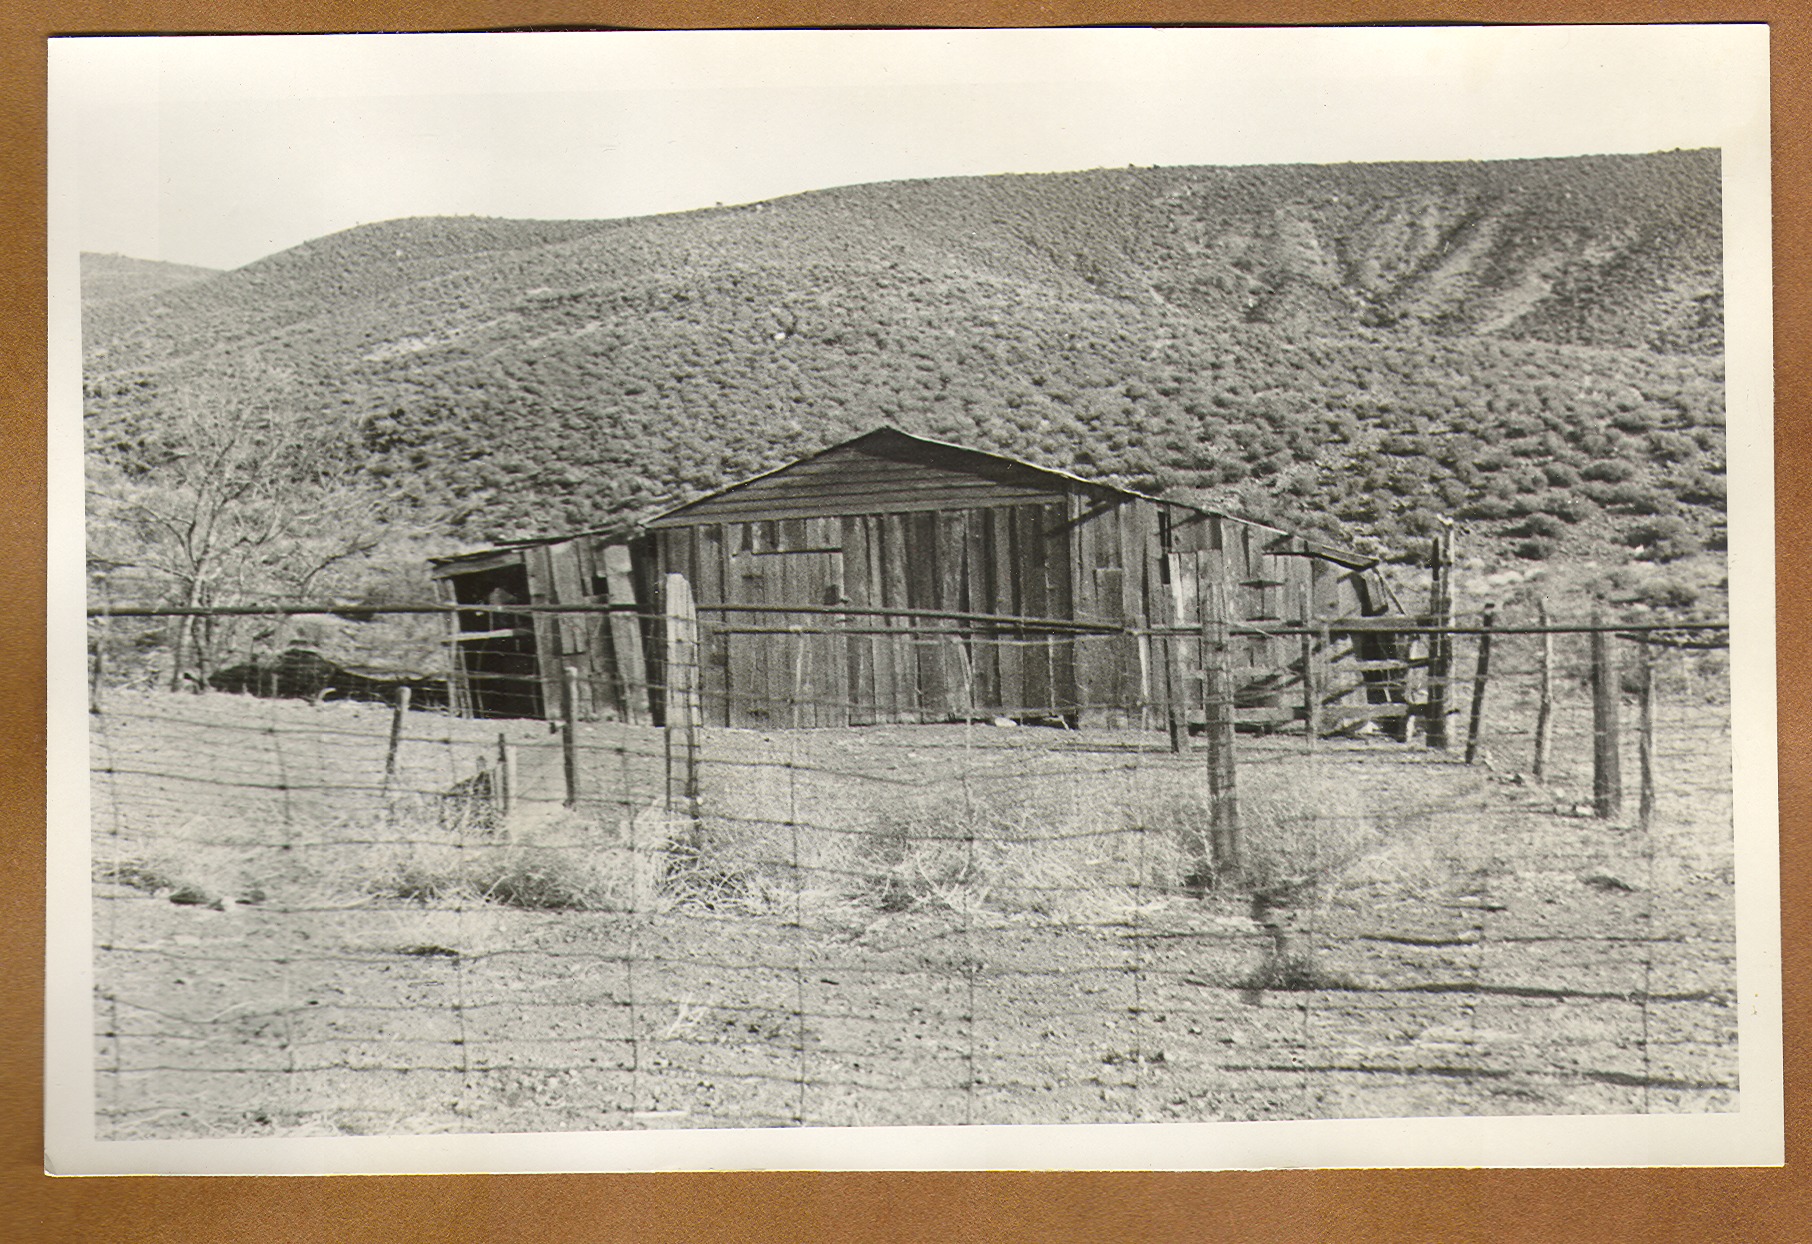 An outbuilding at Walking Box Ranch, Nevada: photographic print